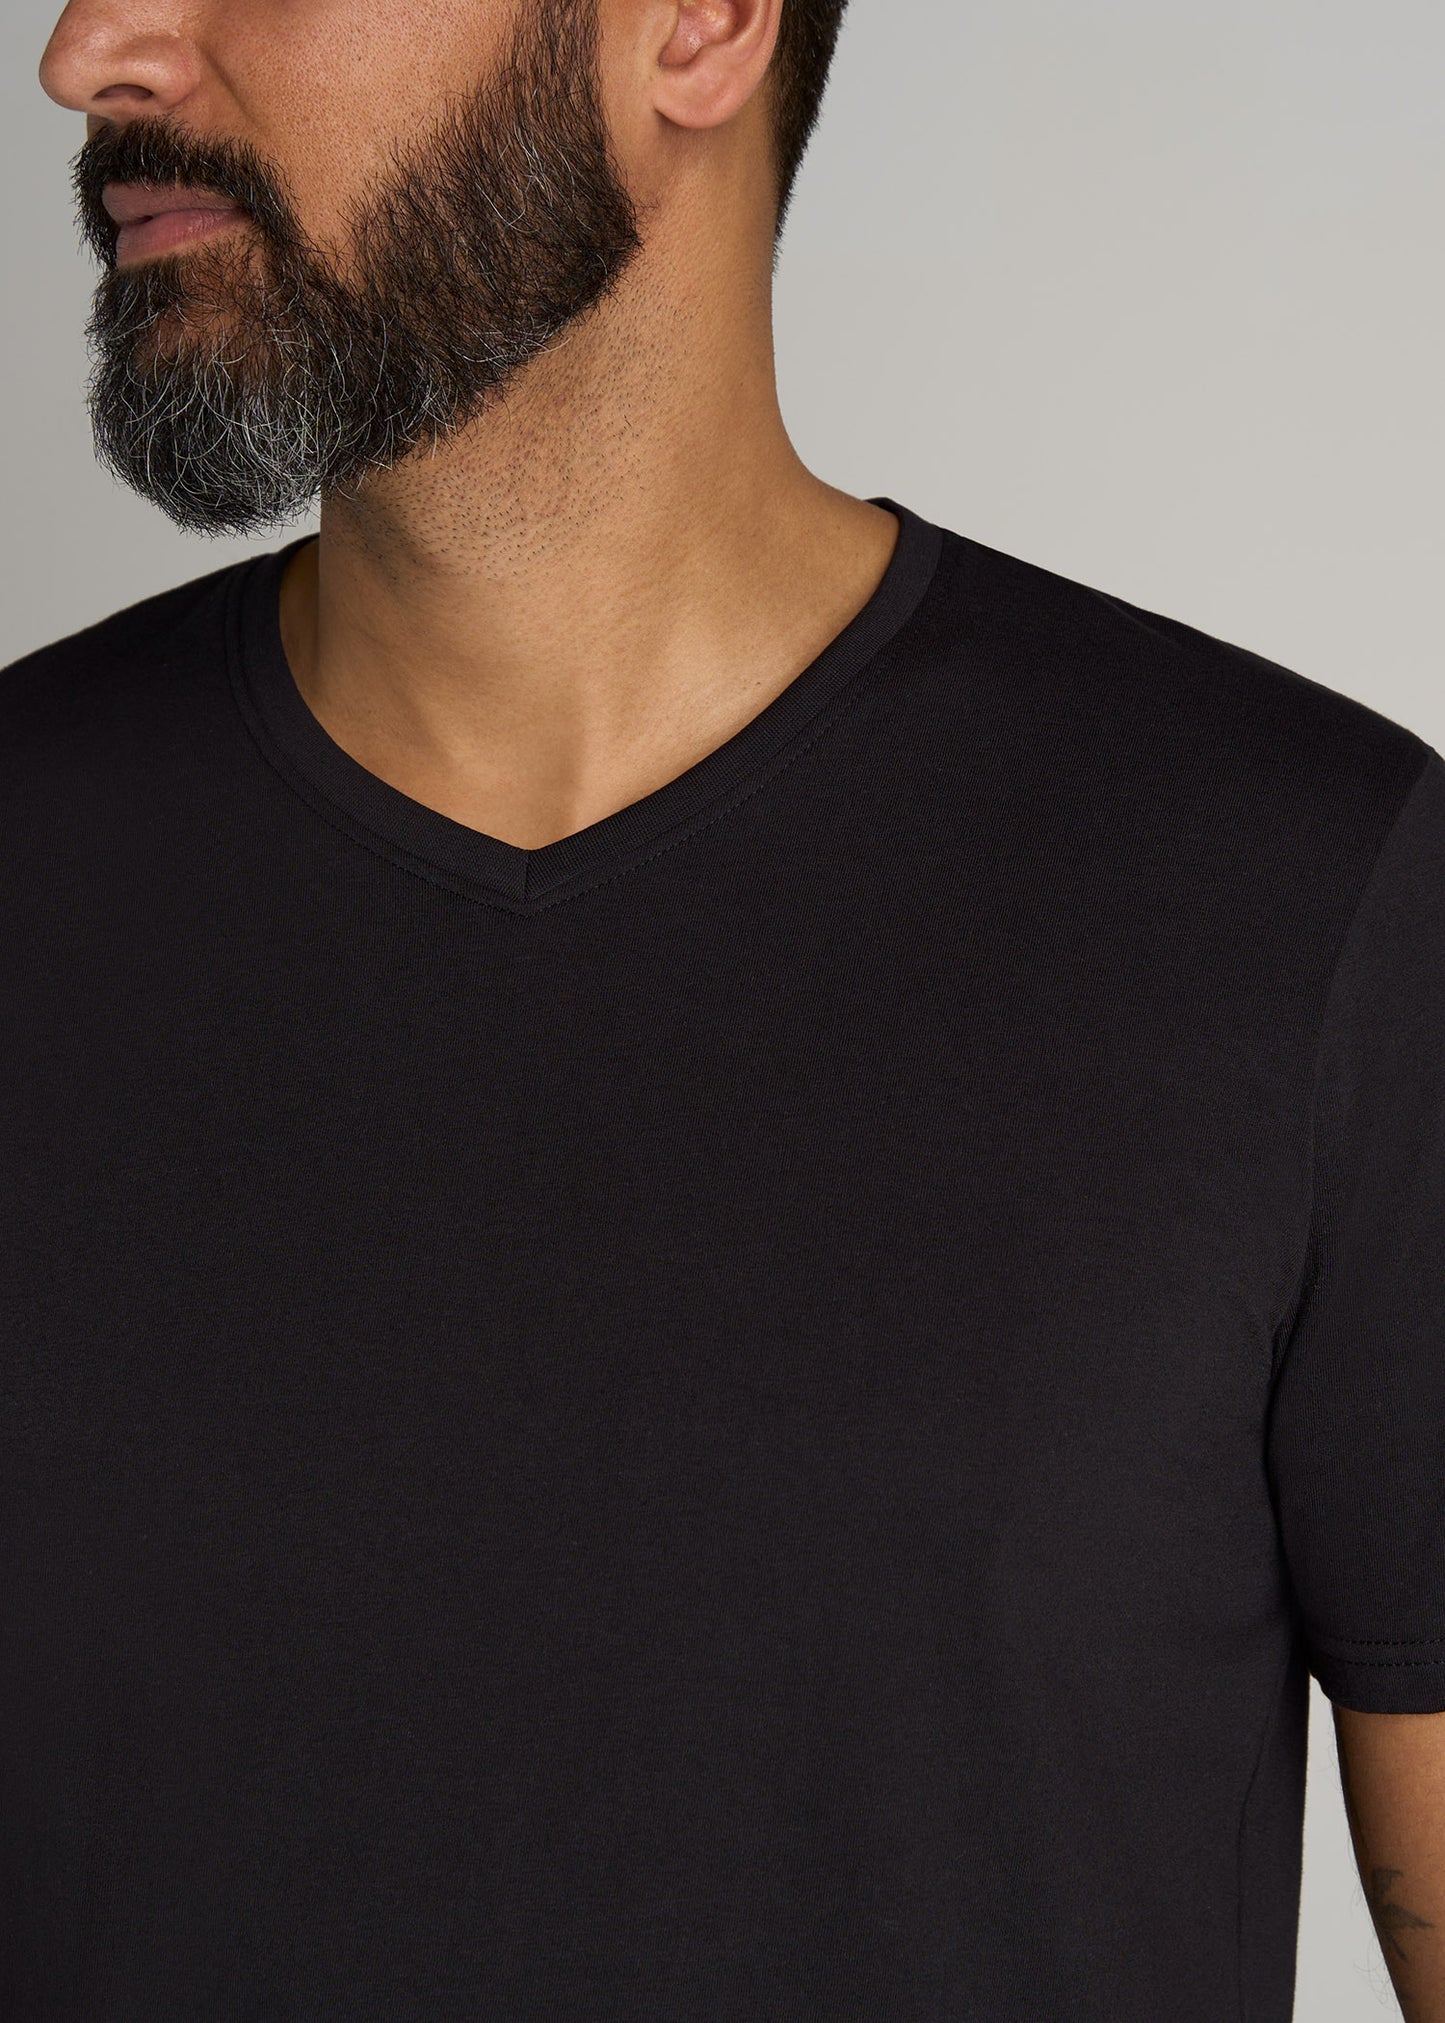       American-Tall-Men-Everyday-REGULAR-FIT-V-Neck-T-Shirt-Black-detail